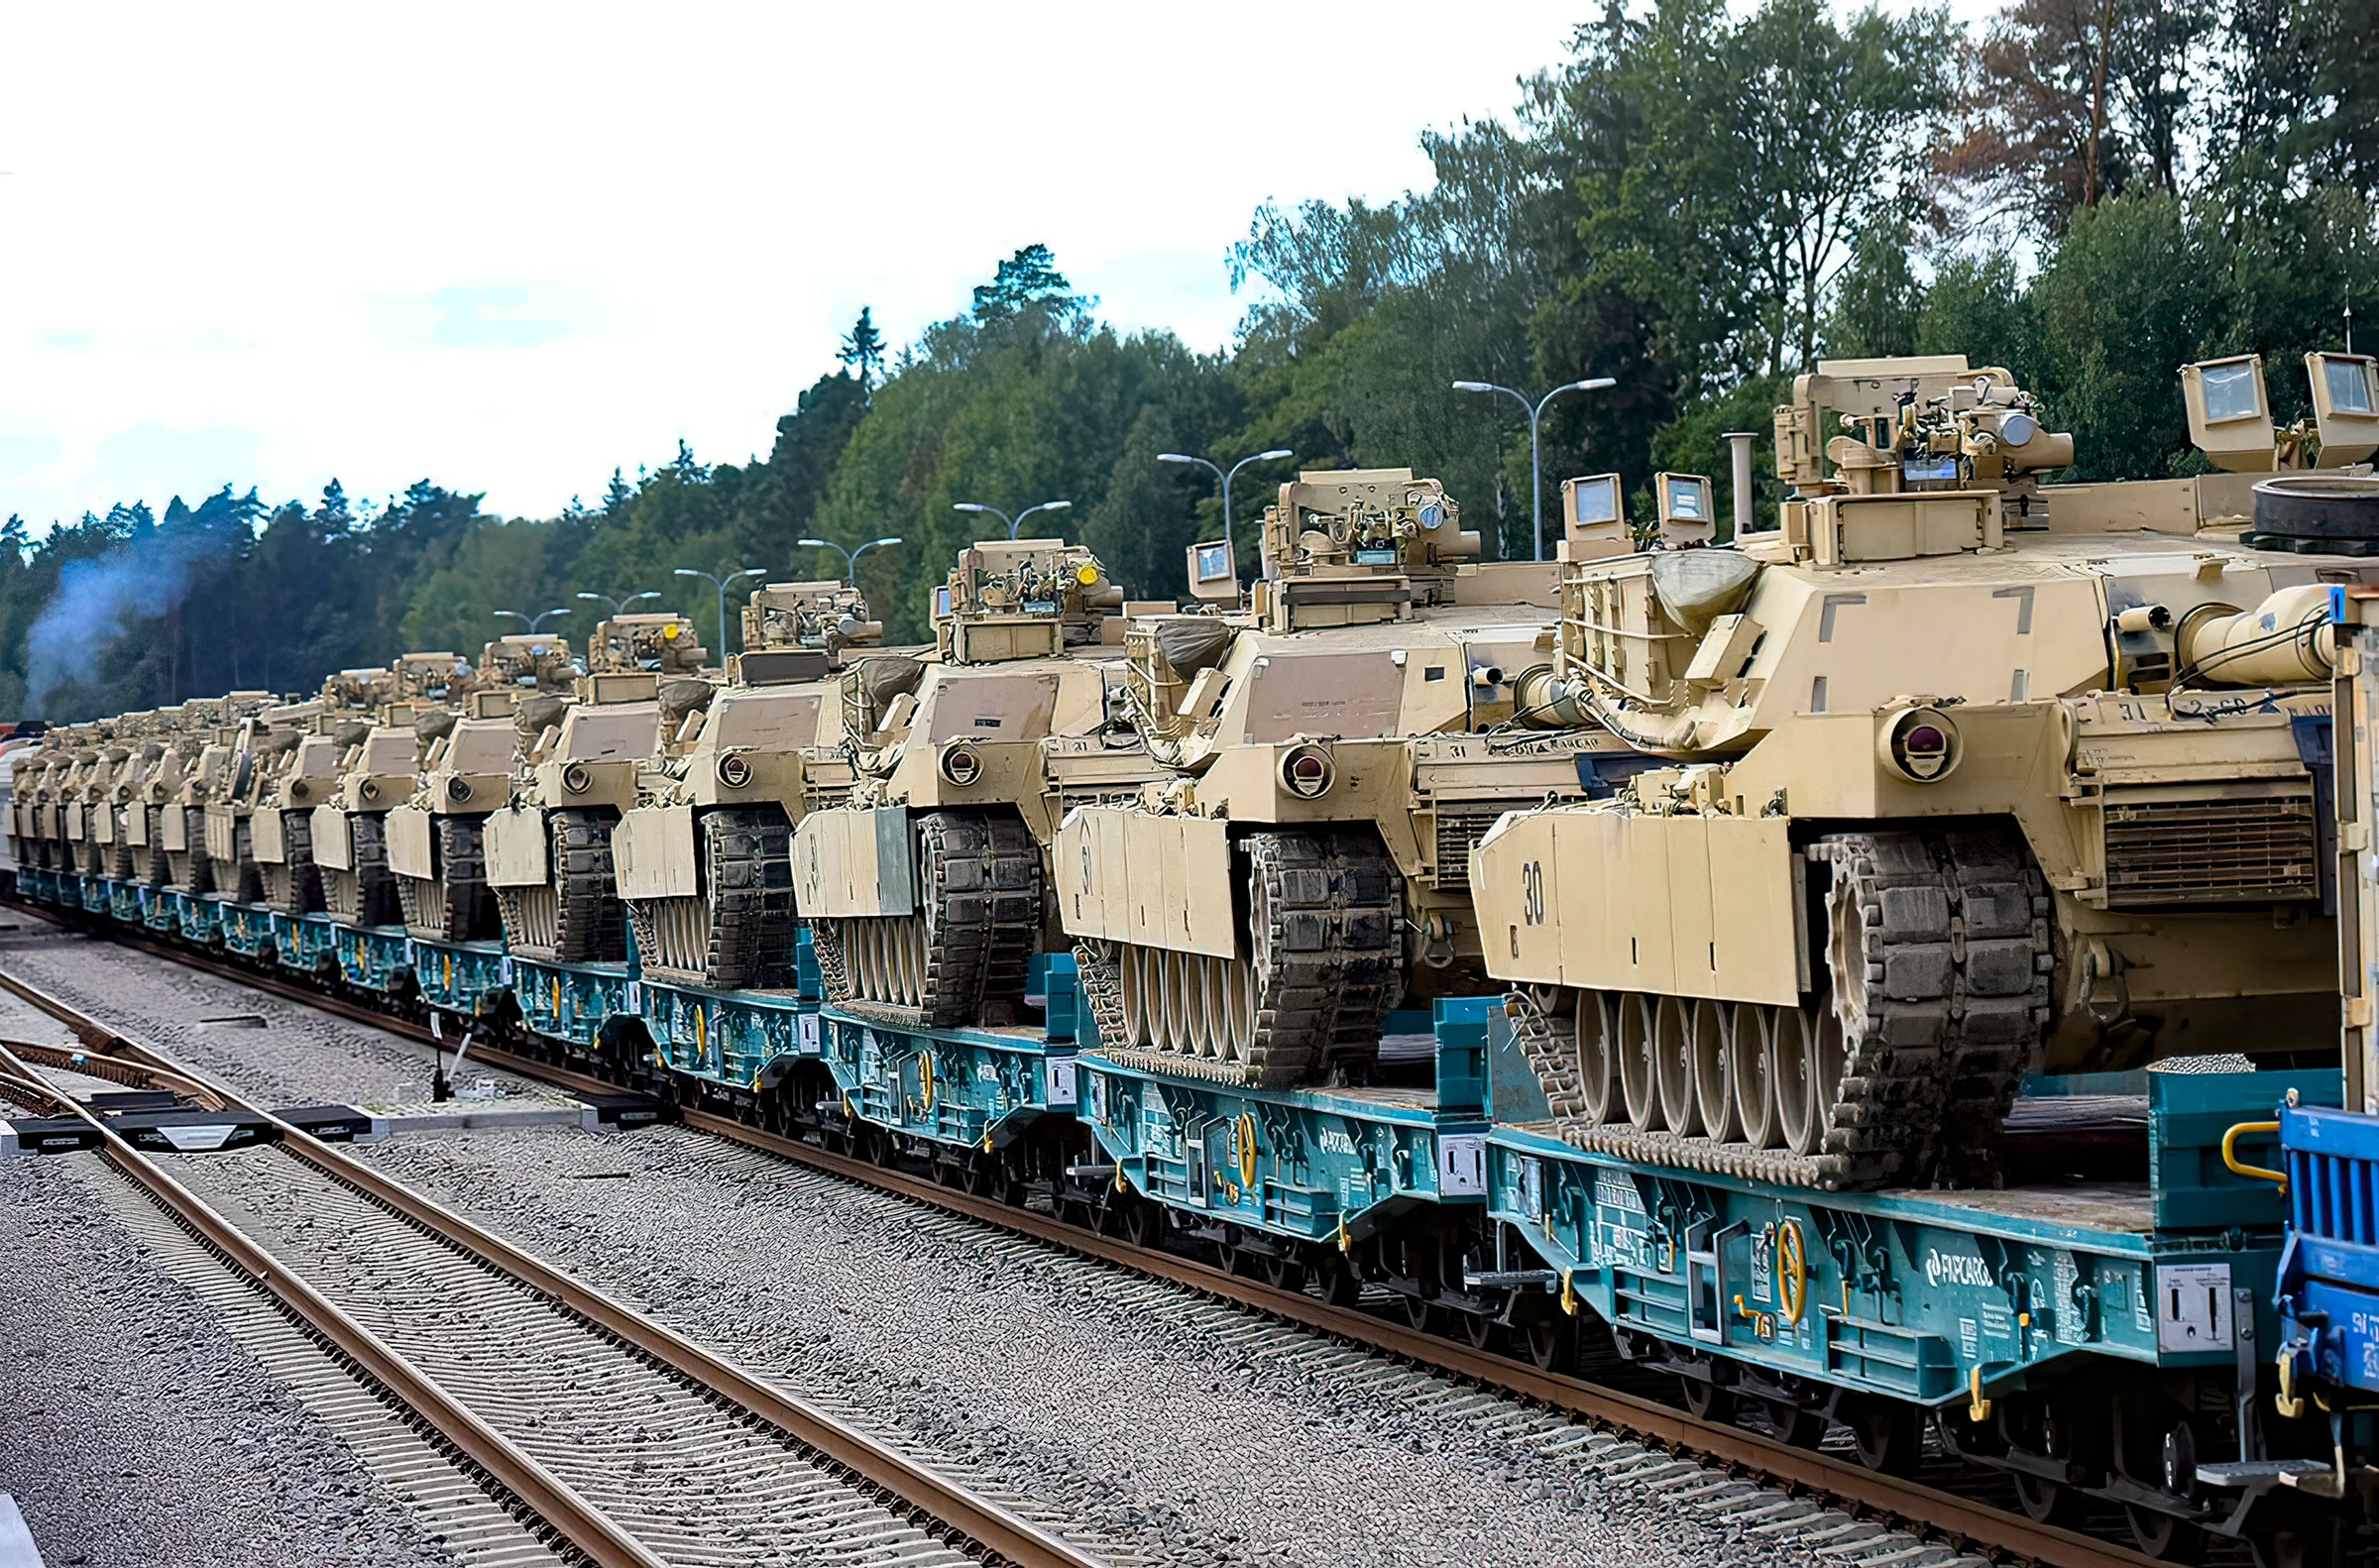 EE. UU. confirma envío de tanques M1 Abrams a Ucrania